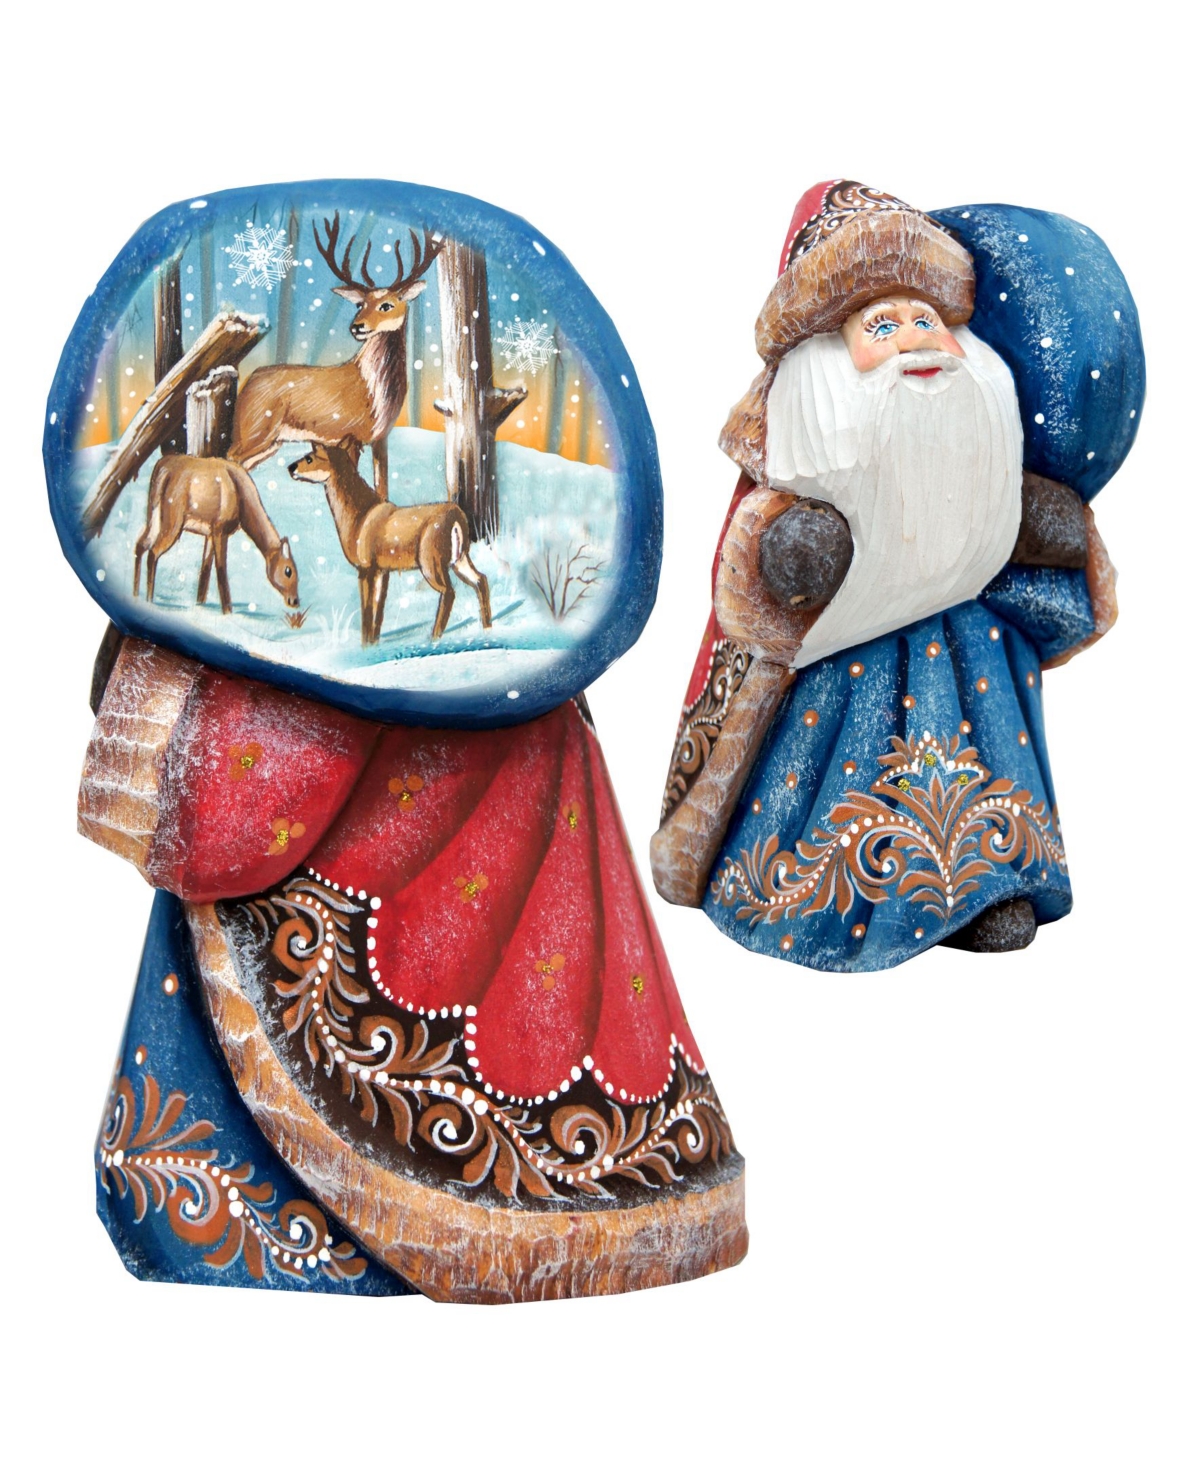 Woodcarved and Hand Painted Santa Reindeer Figurine with Bag - Multi